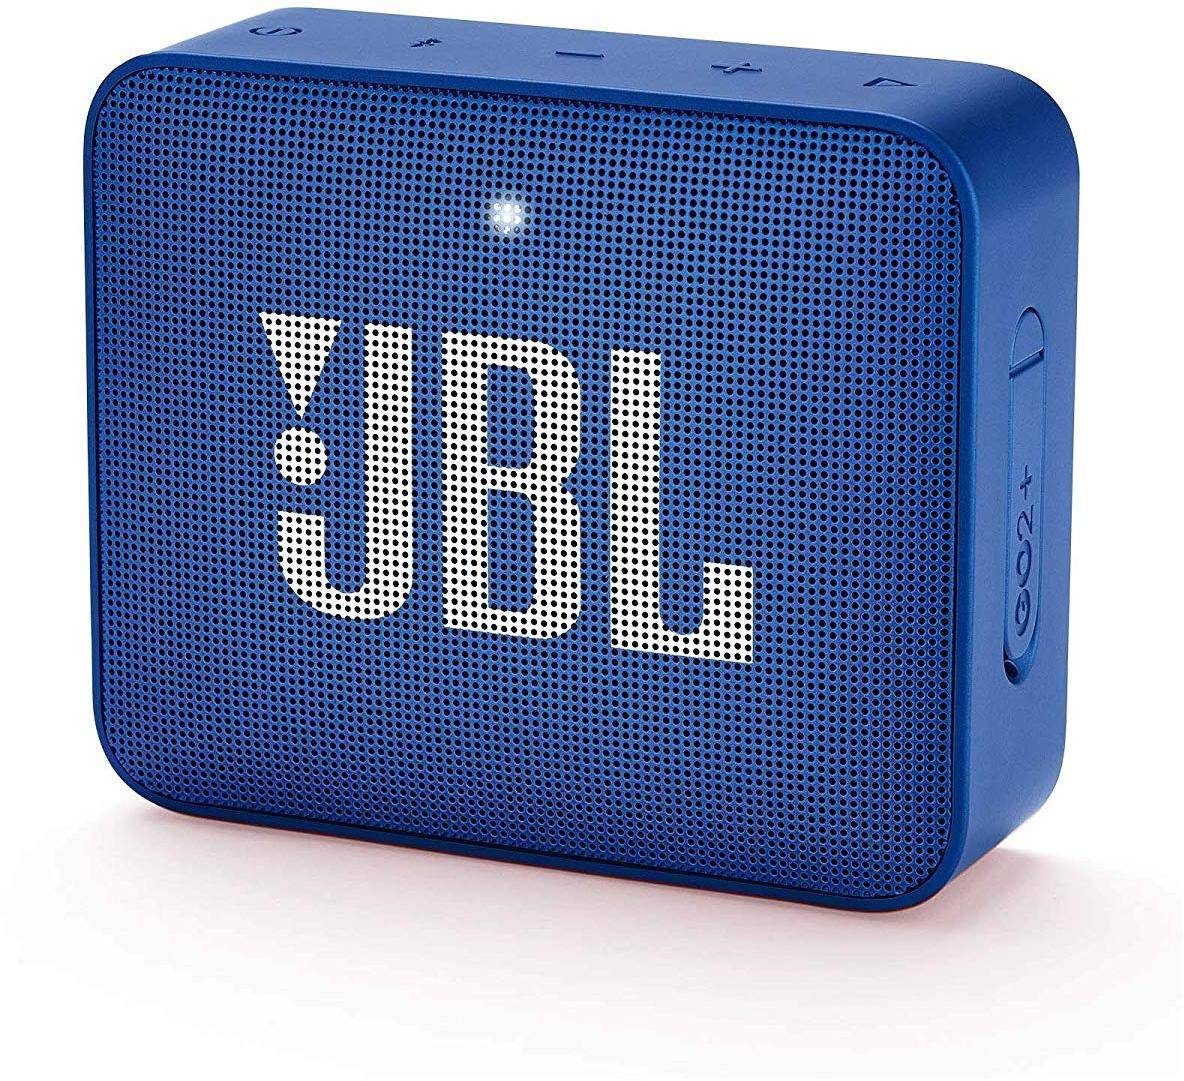 JBL Go 2 Plus Portable Wireless Speaker with Inbuilt Microphone zoom image